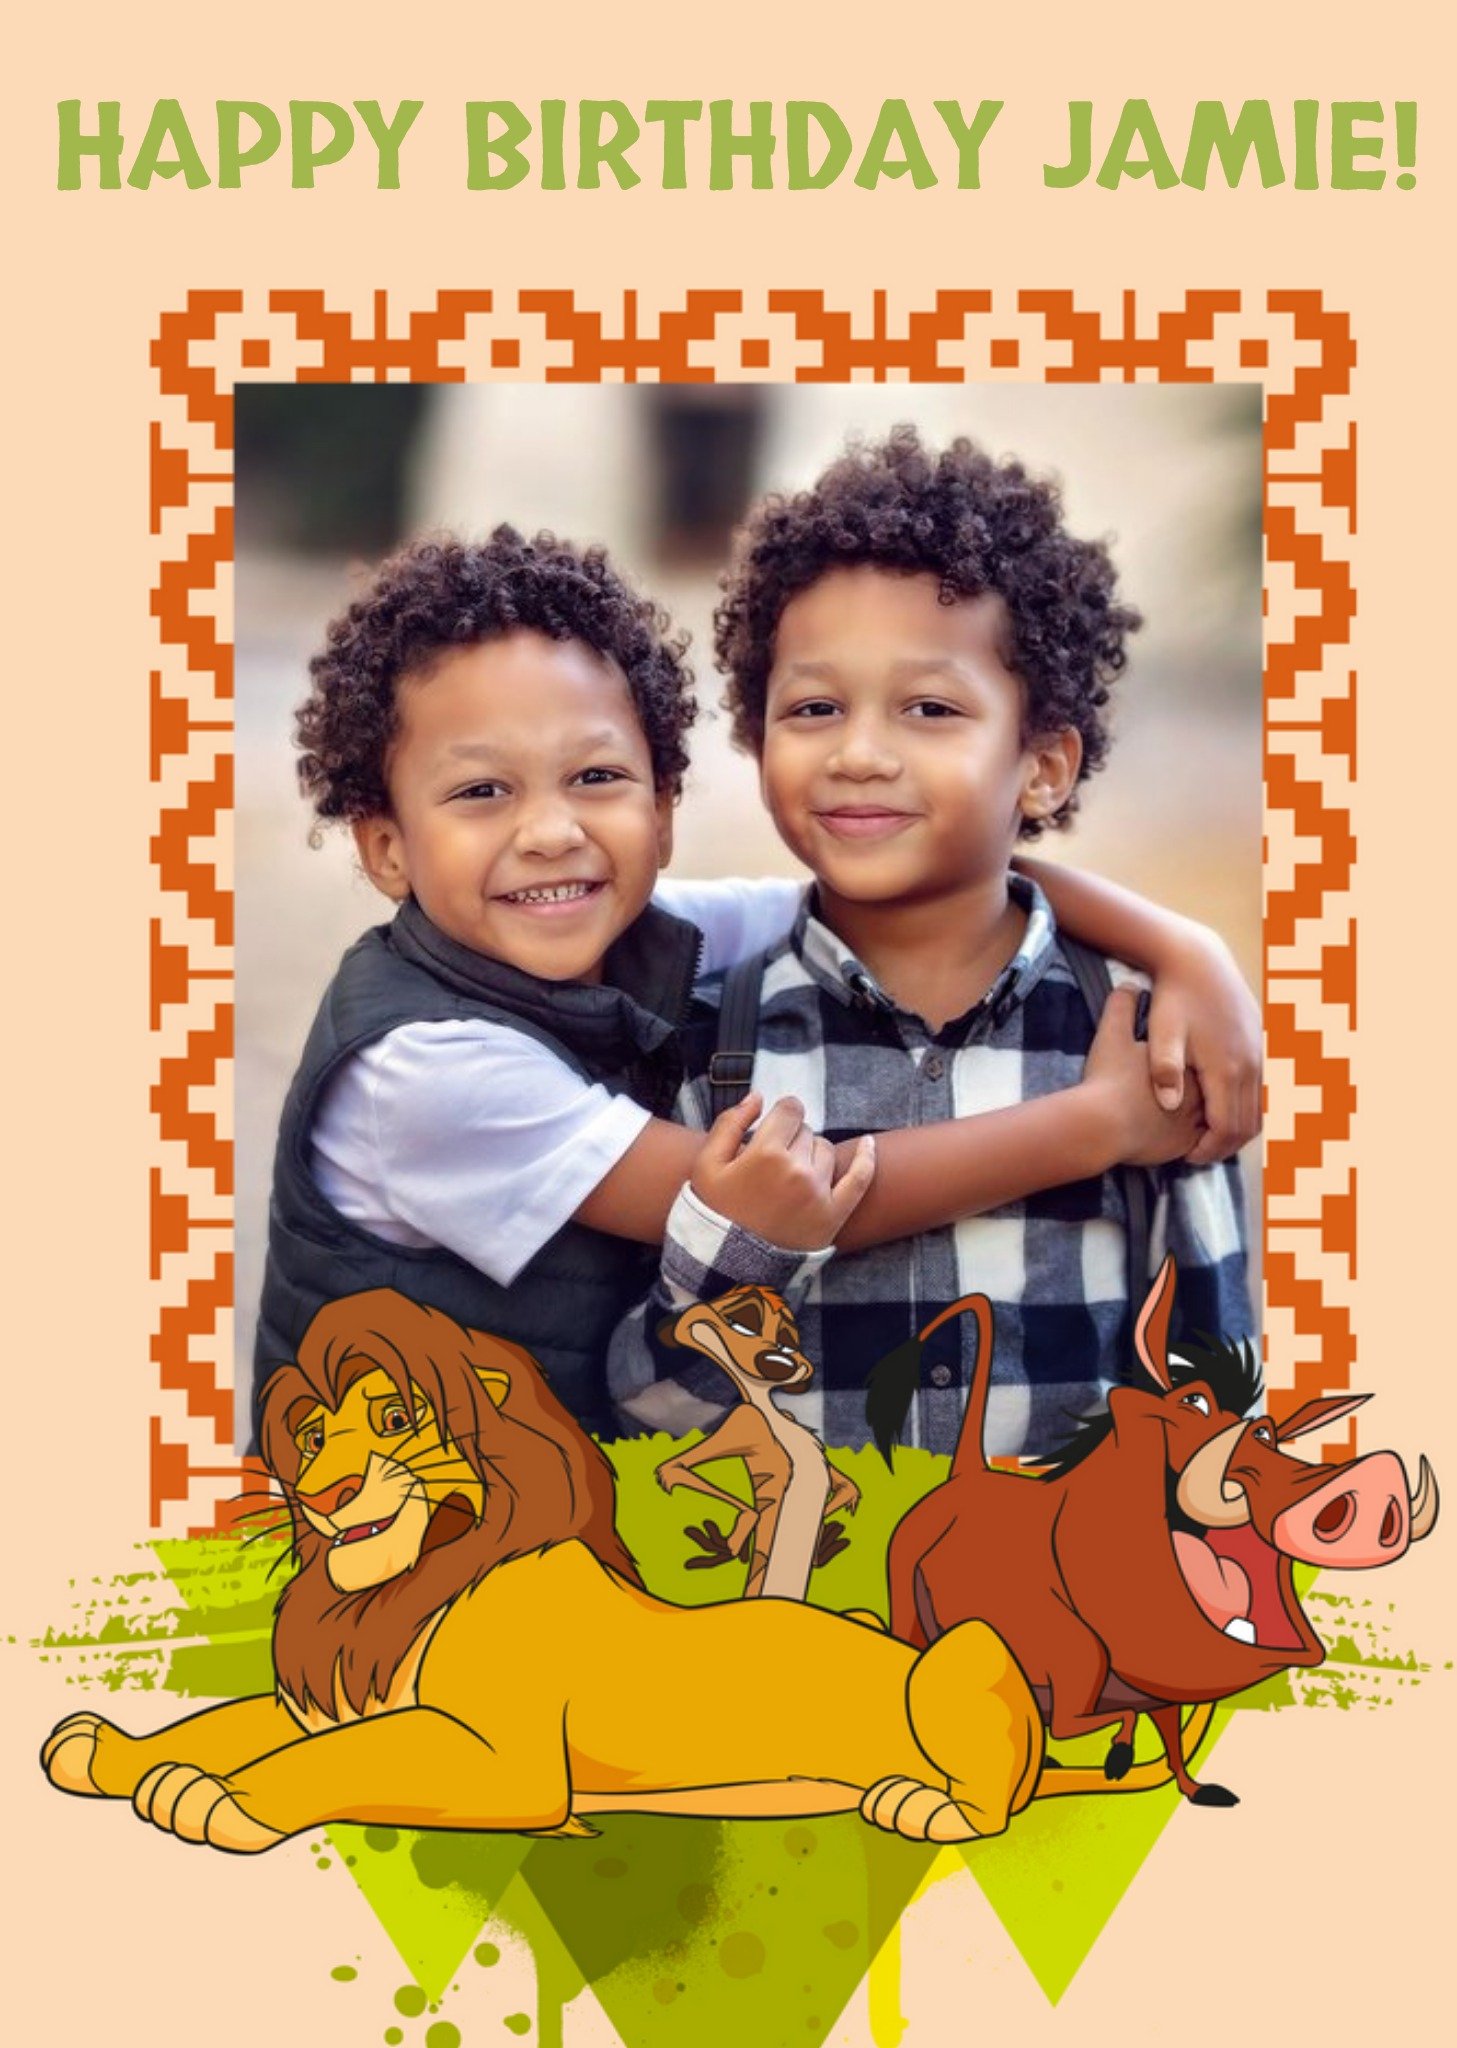 Disney Lion King Happy Birthday Photo Card - Simba, Timon And Pumba, Large